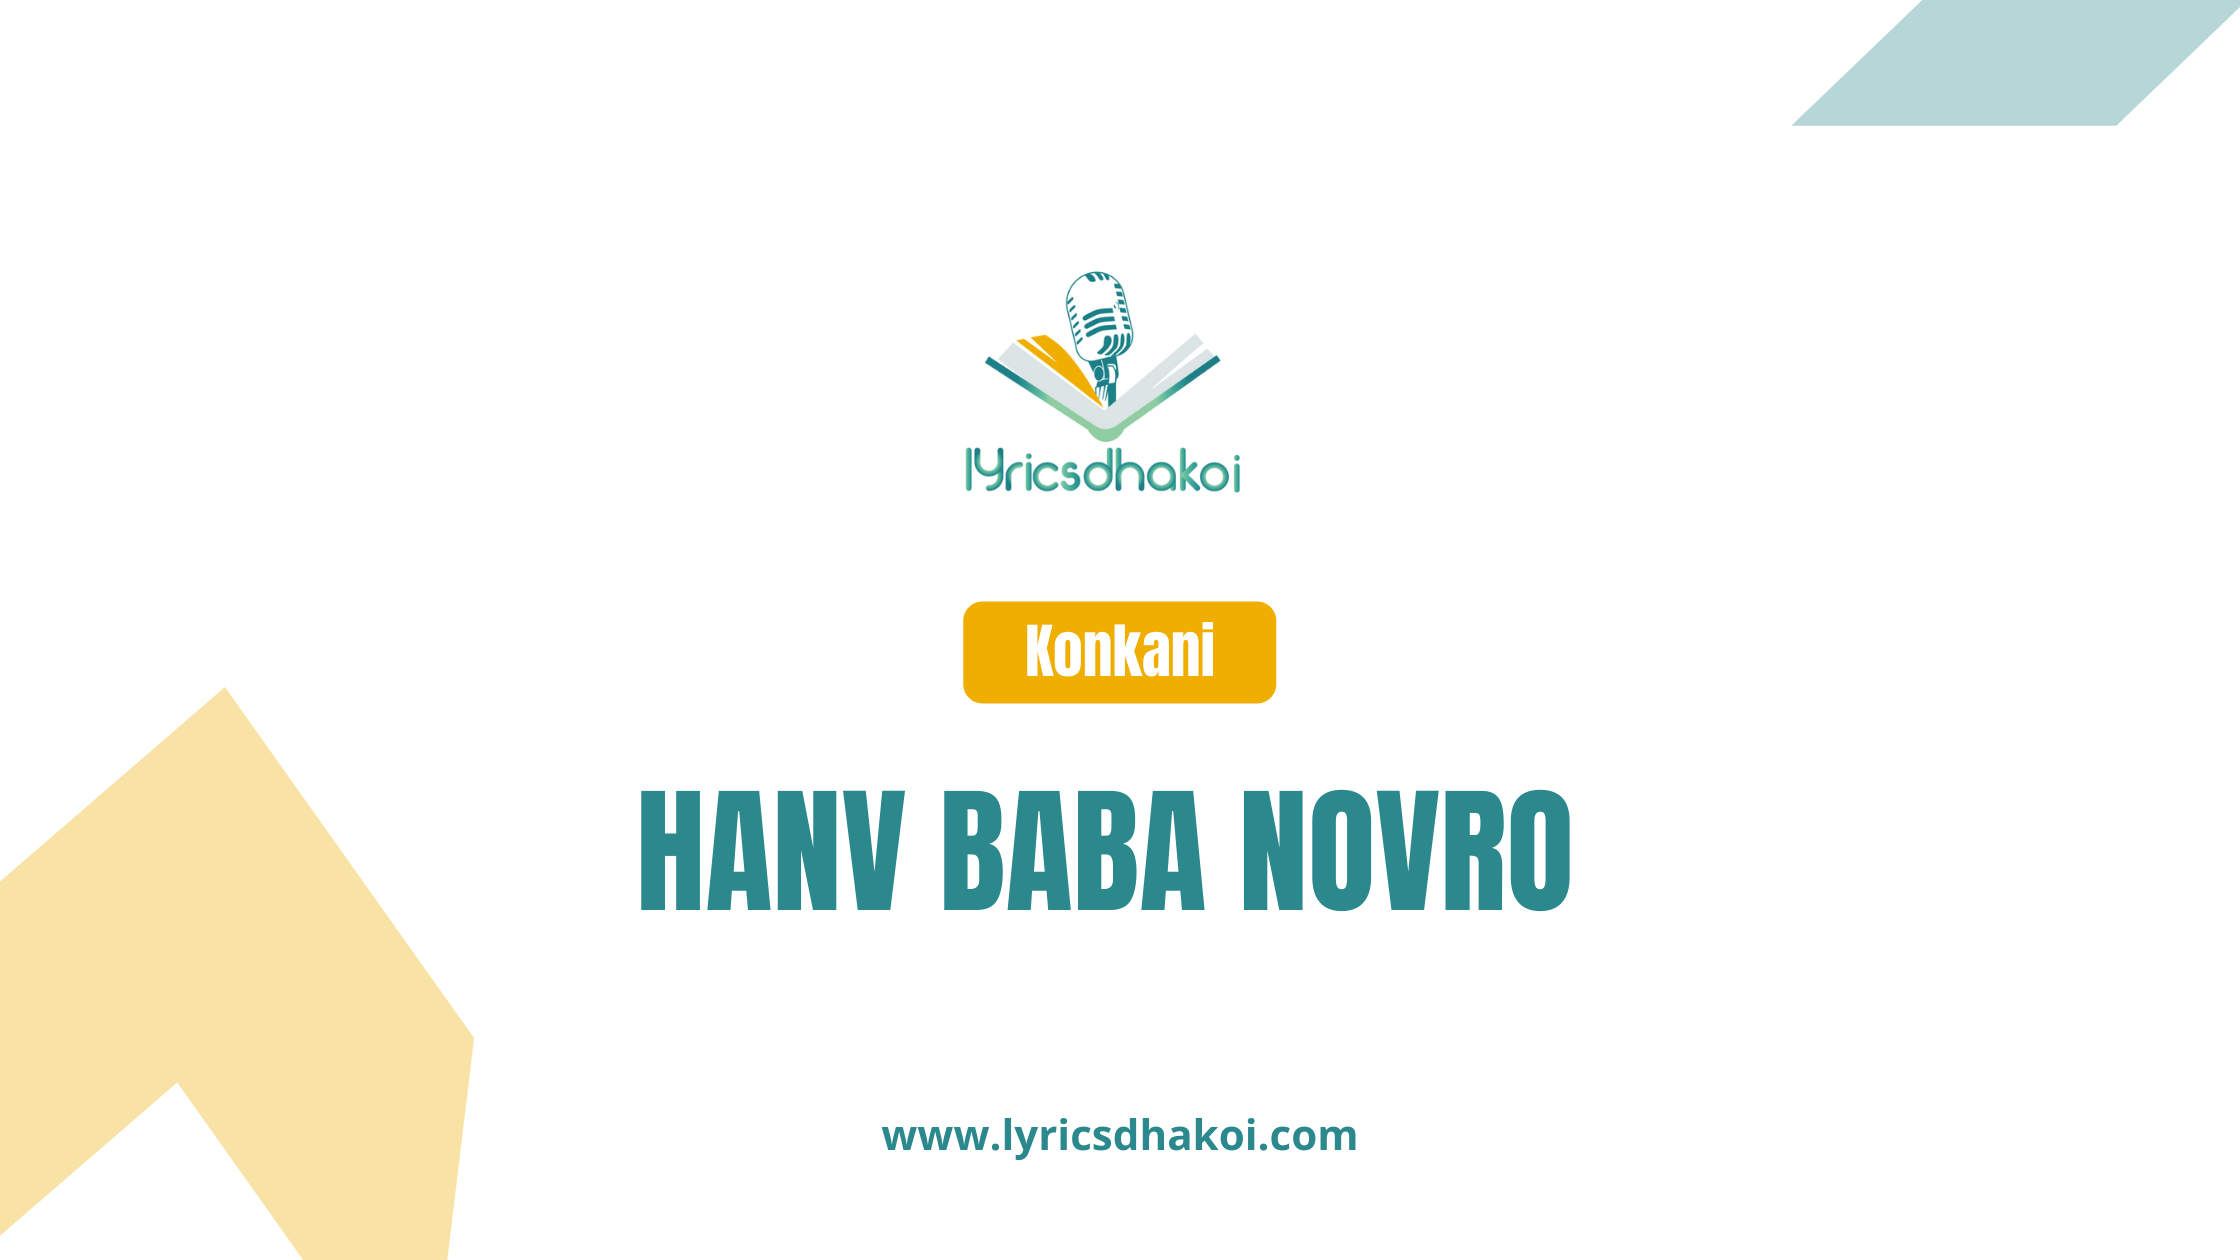 Hanv Baba Novro Konkani Lyrics for Karaoke Online - LyricsDhakoi.com